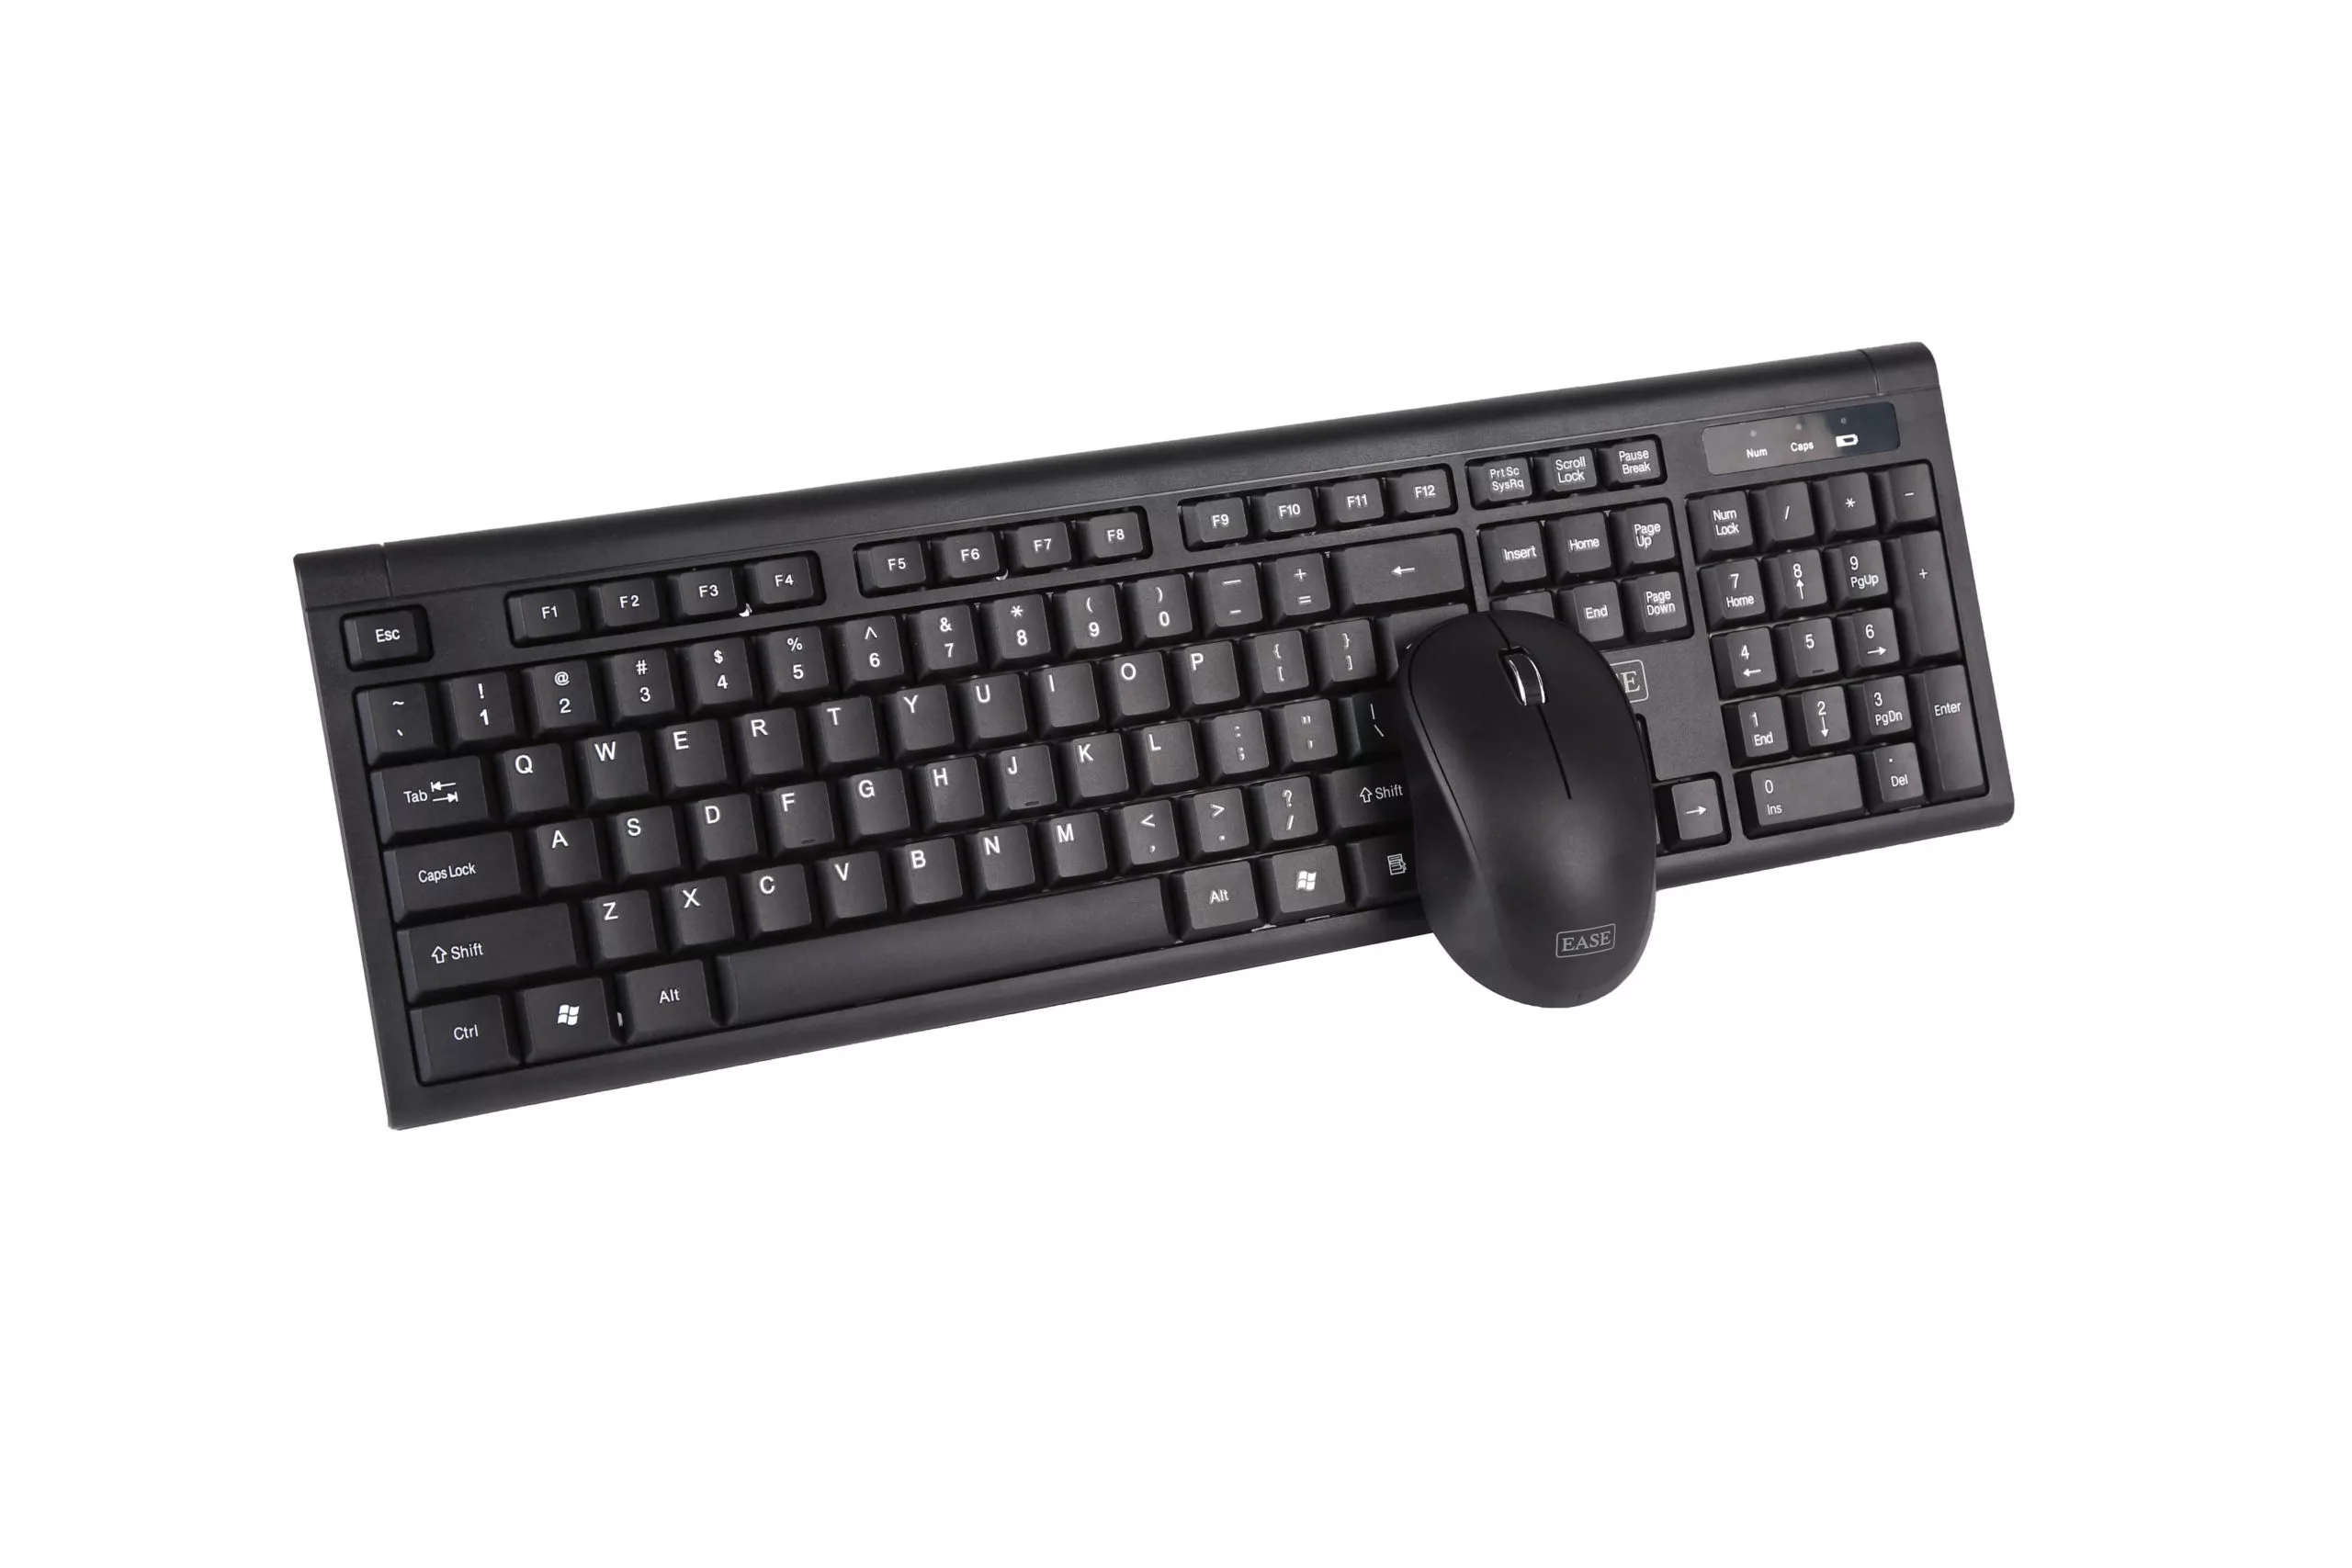 Ease EKM200 Wireless Keyboard Mouse Combo